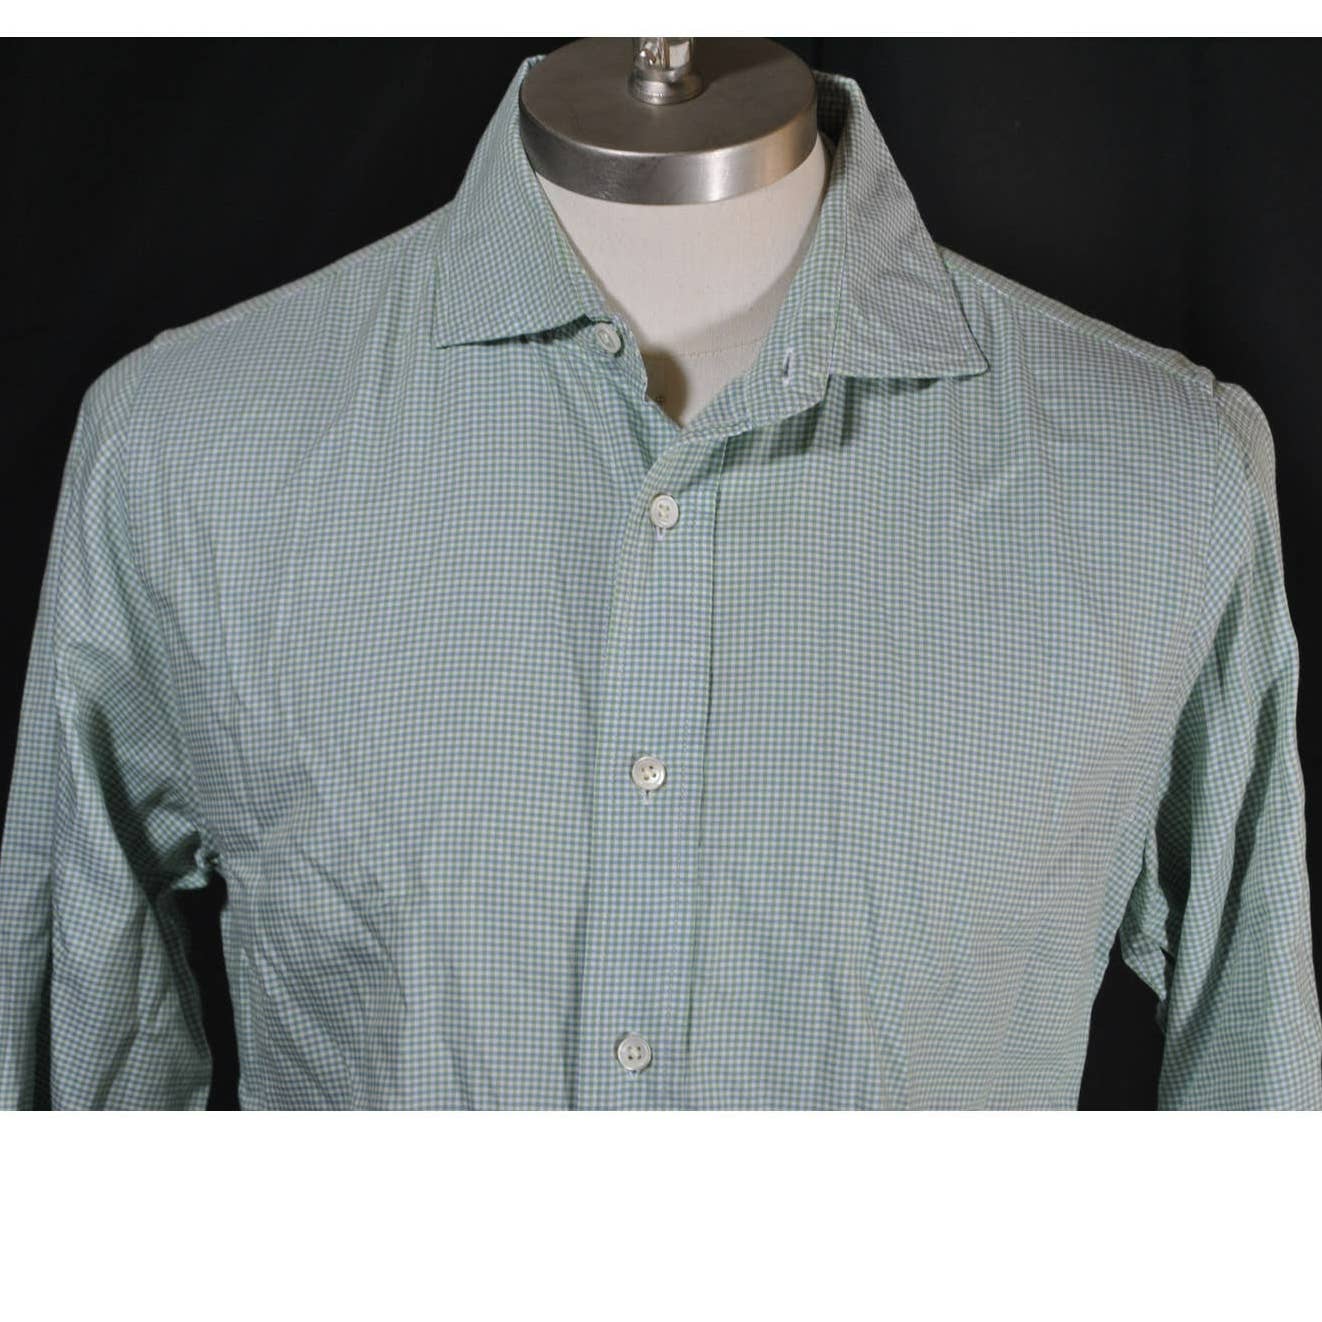 Jack Spade Green White Gingham Spread Collar Shirt - M